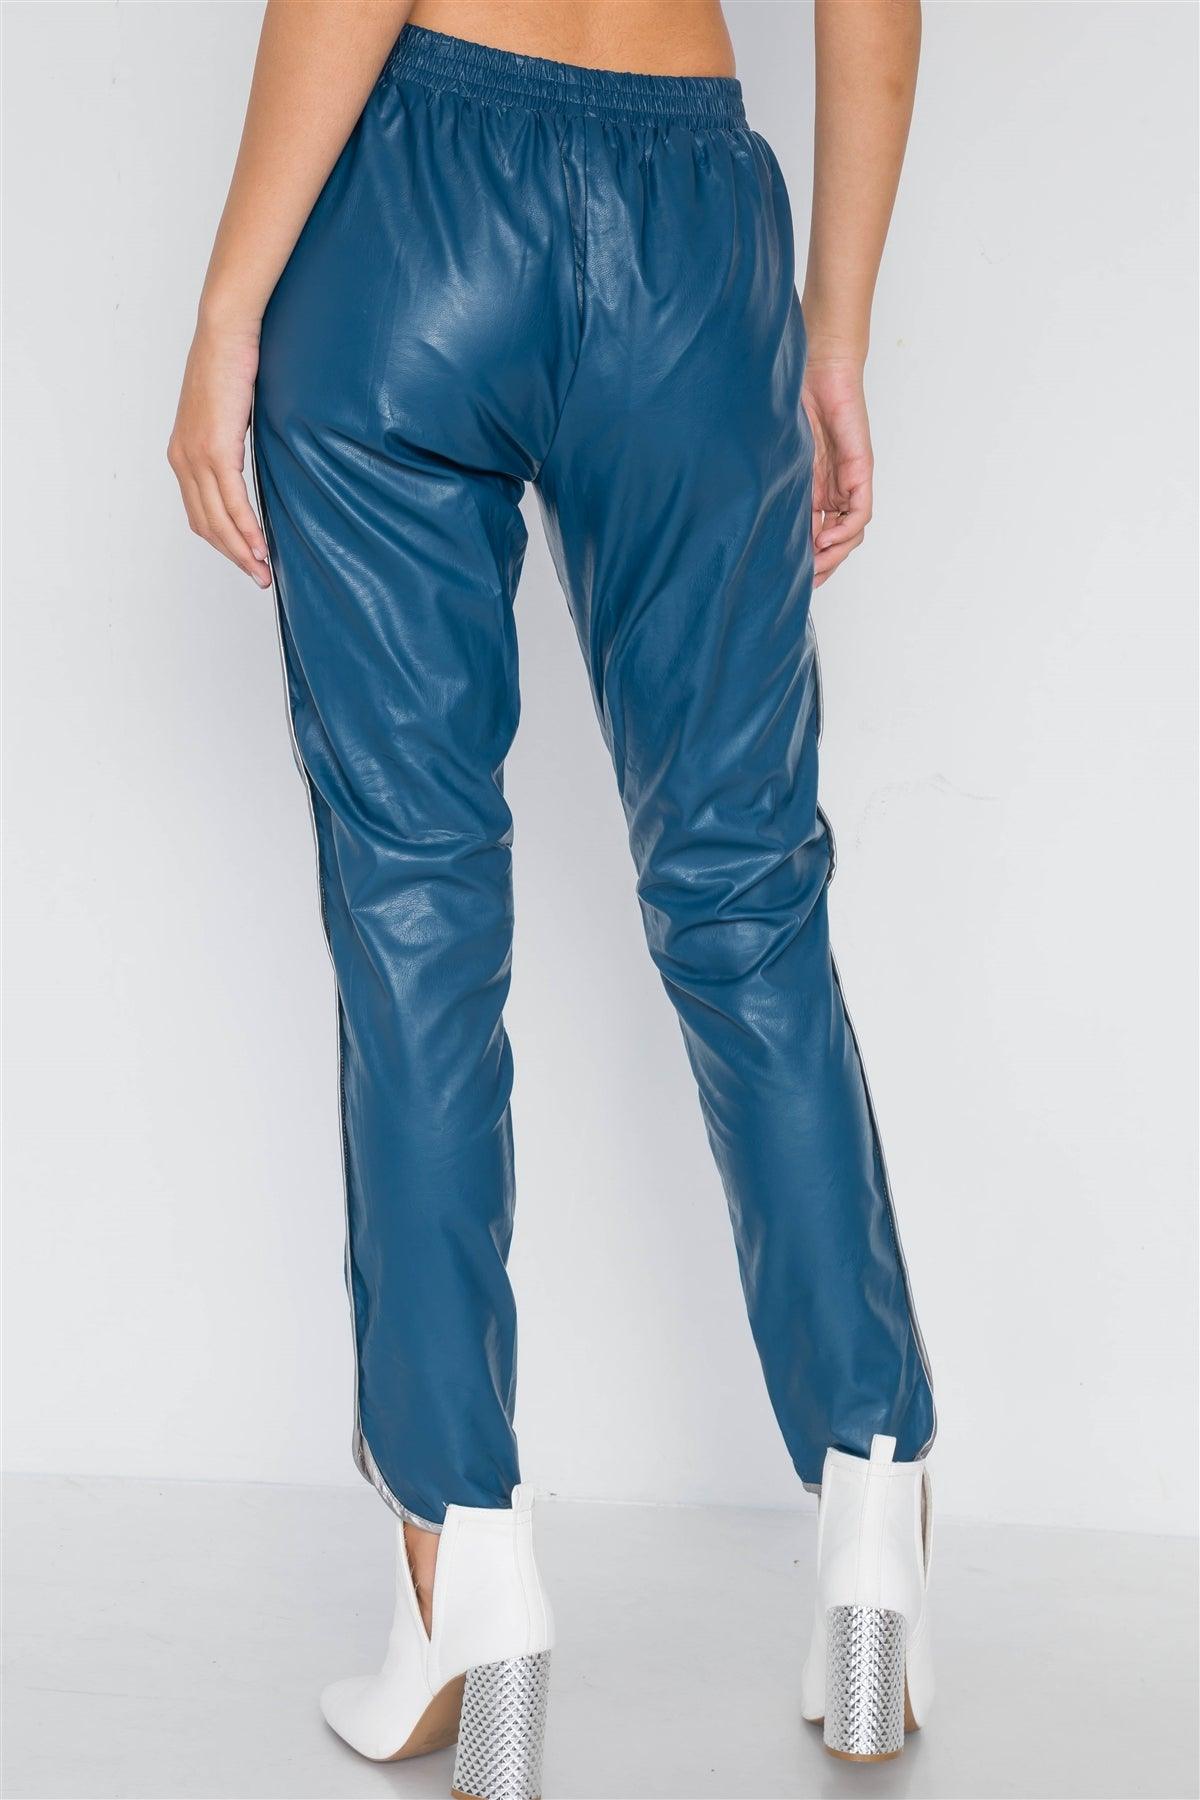 Teal Blue Vegan Leather Mid-Rise Pants /2-2-2